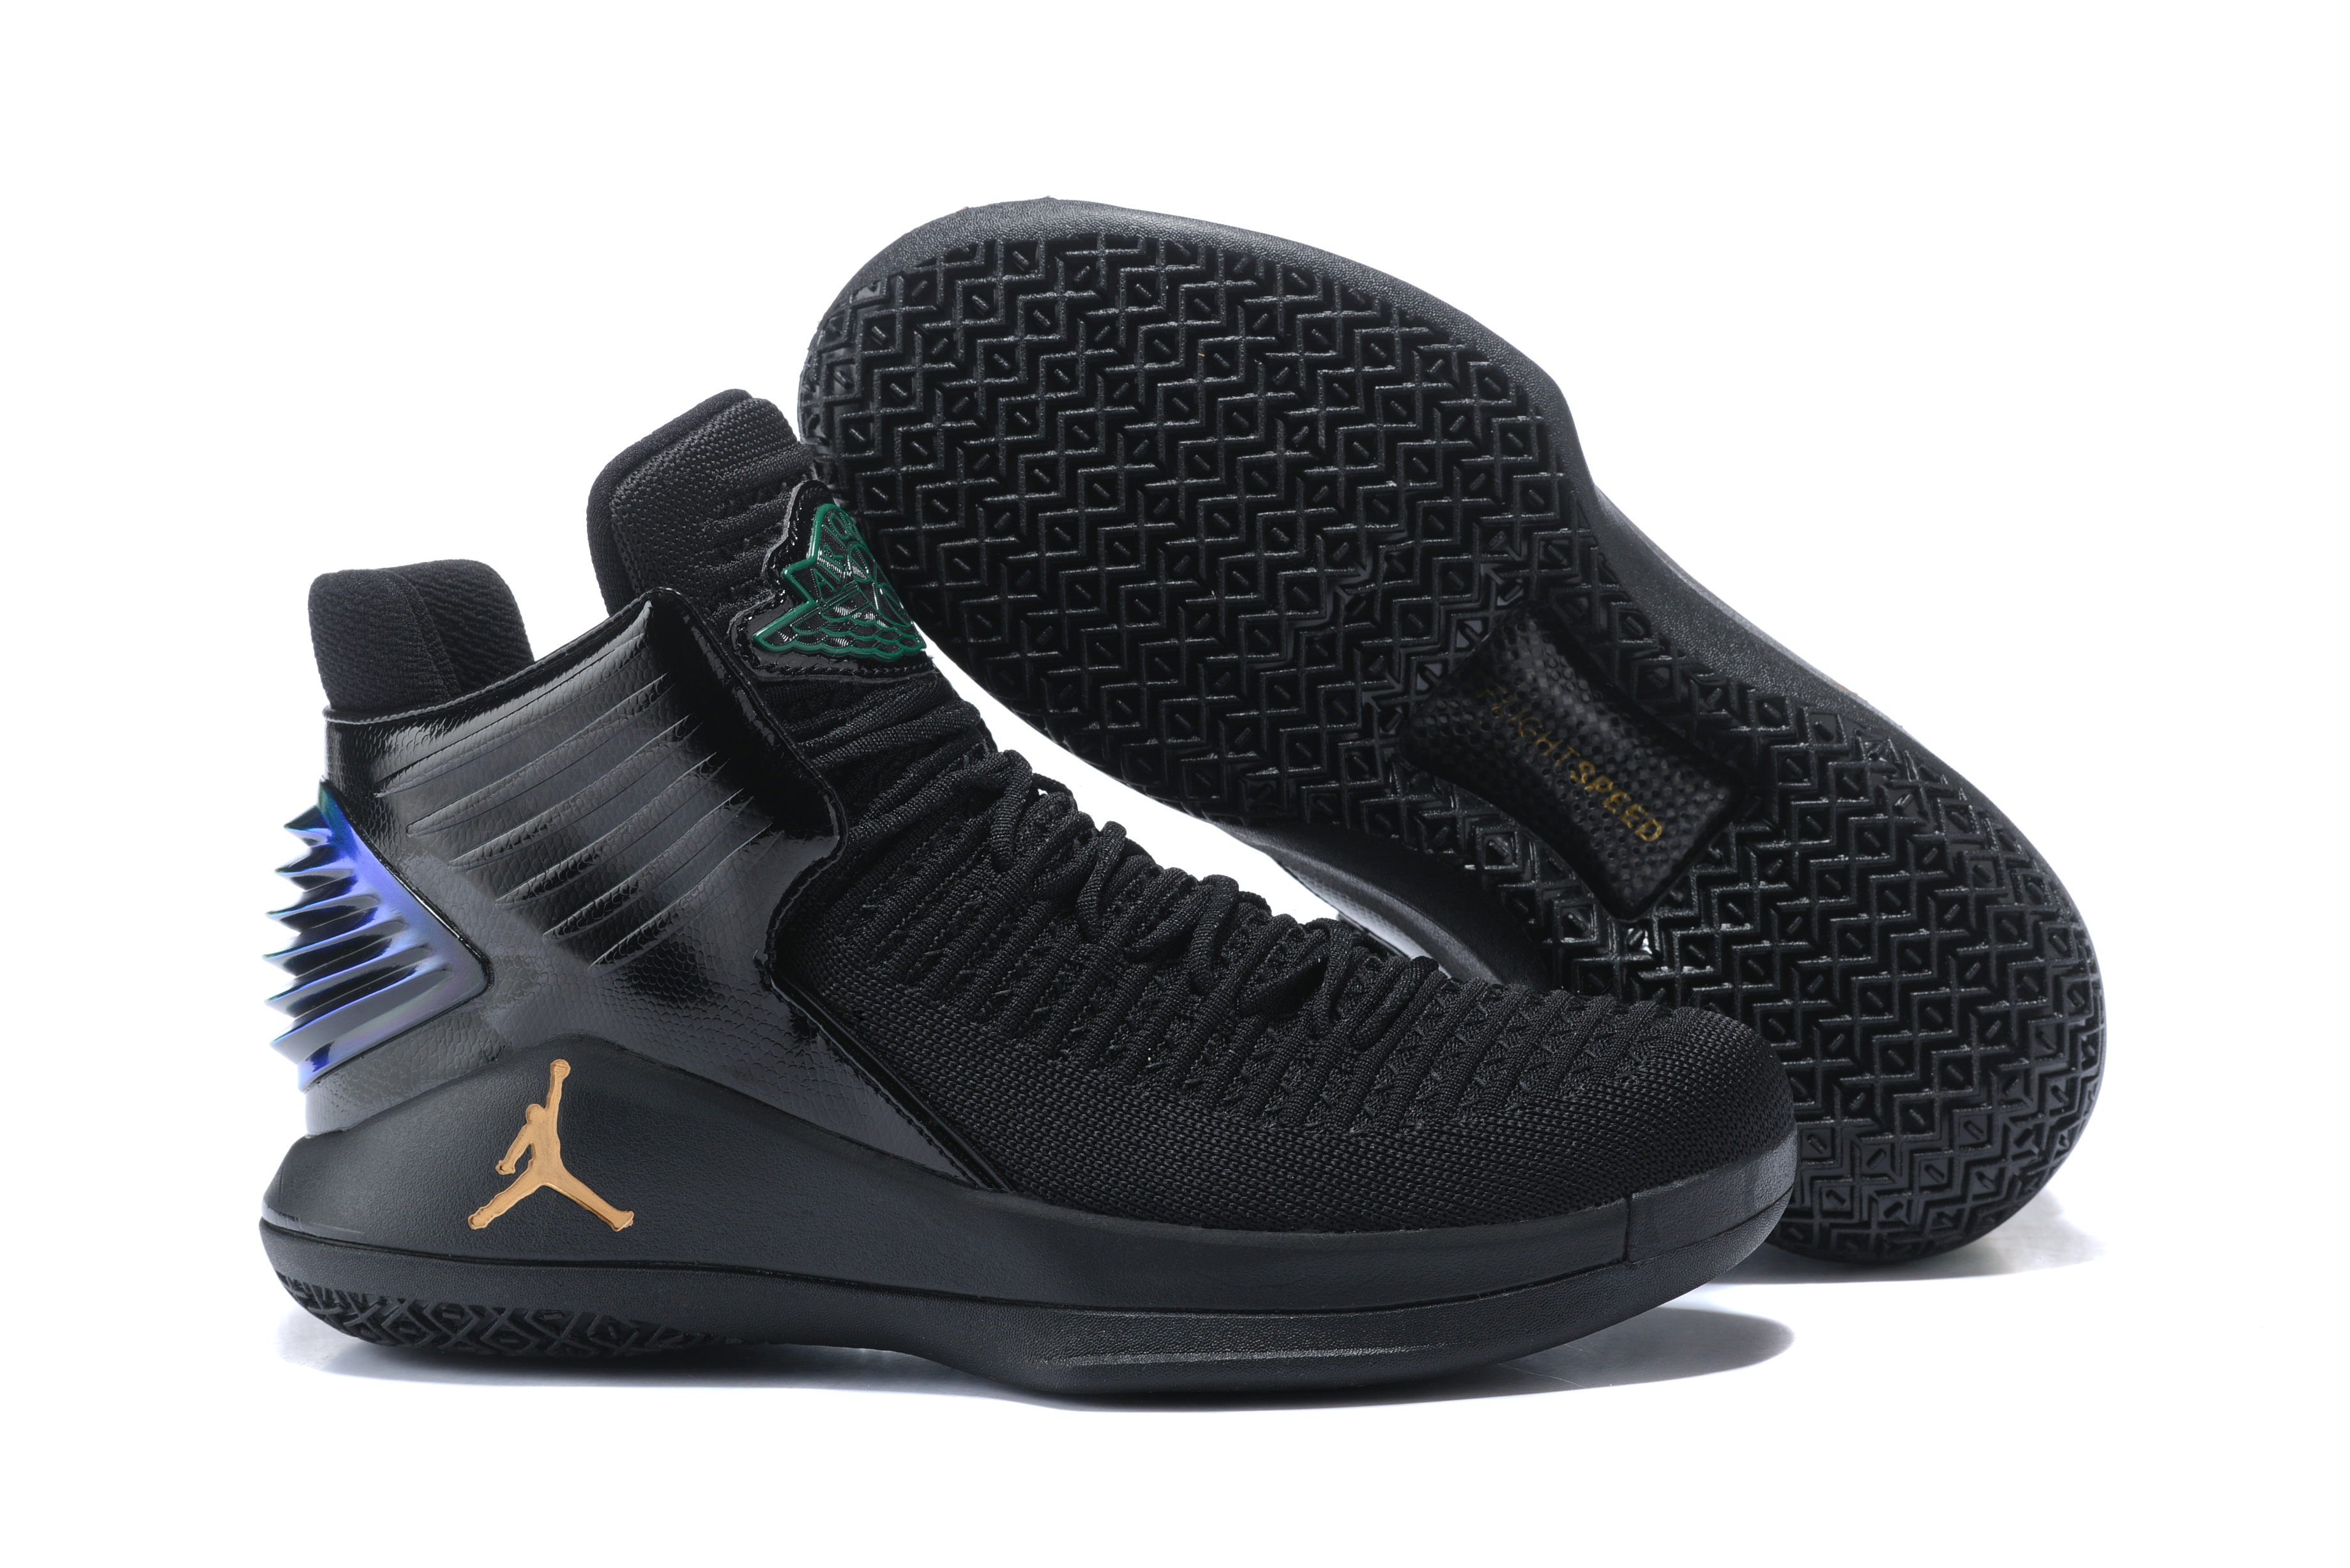 Original Air Jordan 32 Black Shoes - Click Image to Close